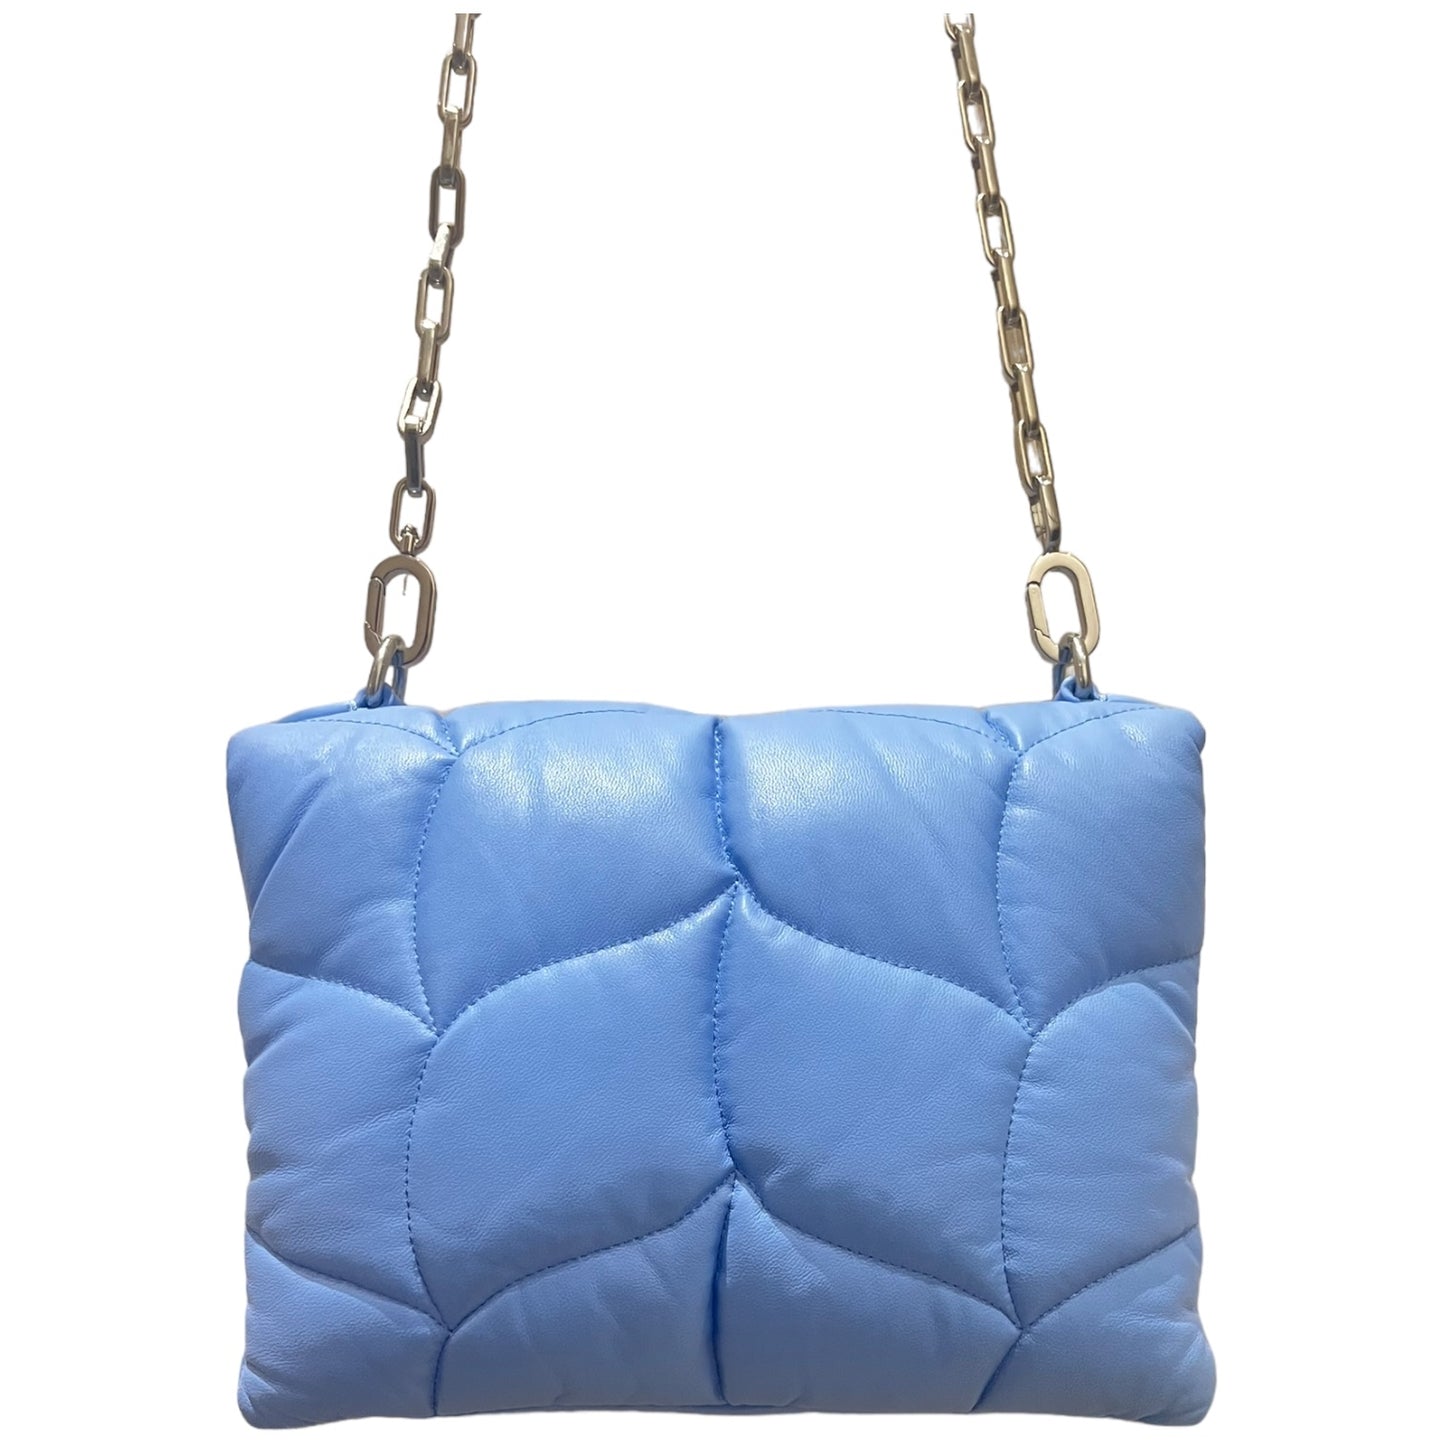 Mulberry Little Softie Blue Bag - NEW